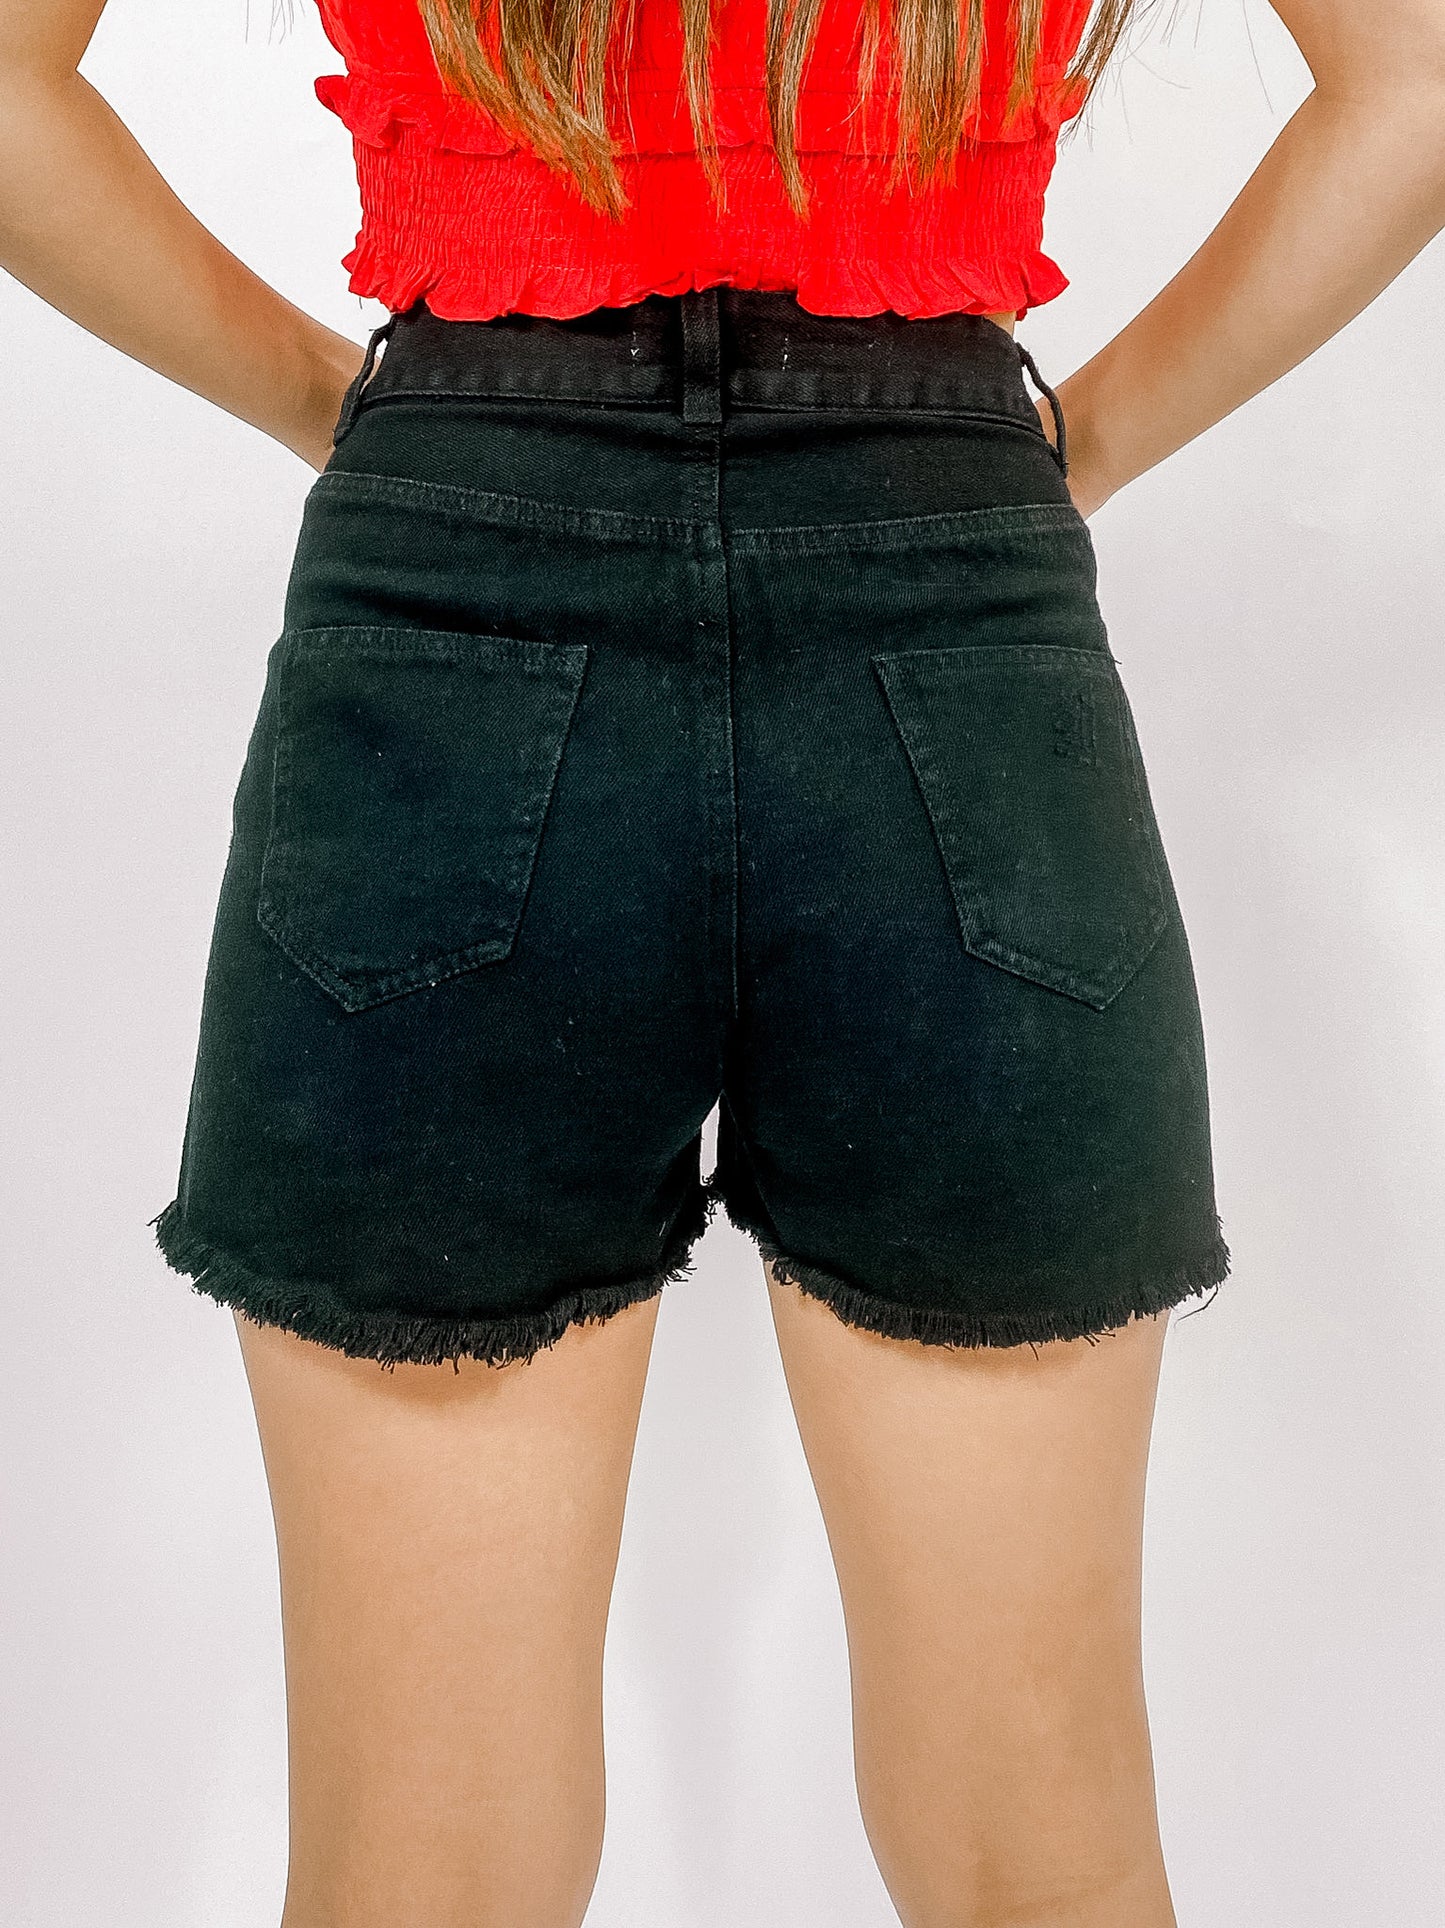 On Trend Asymmetrical Shorts - Black